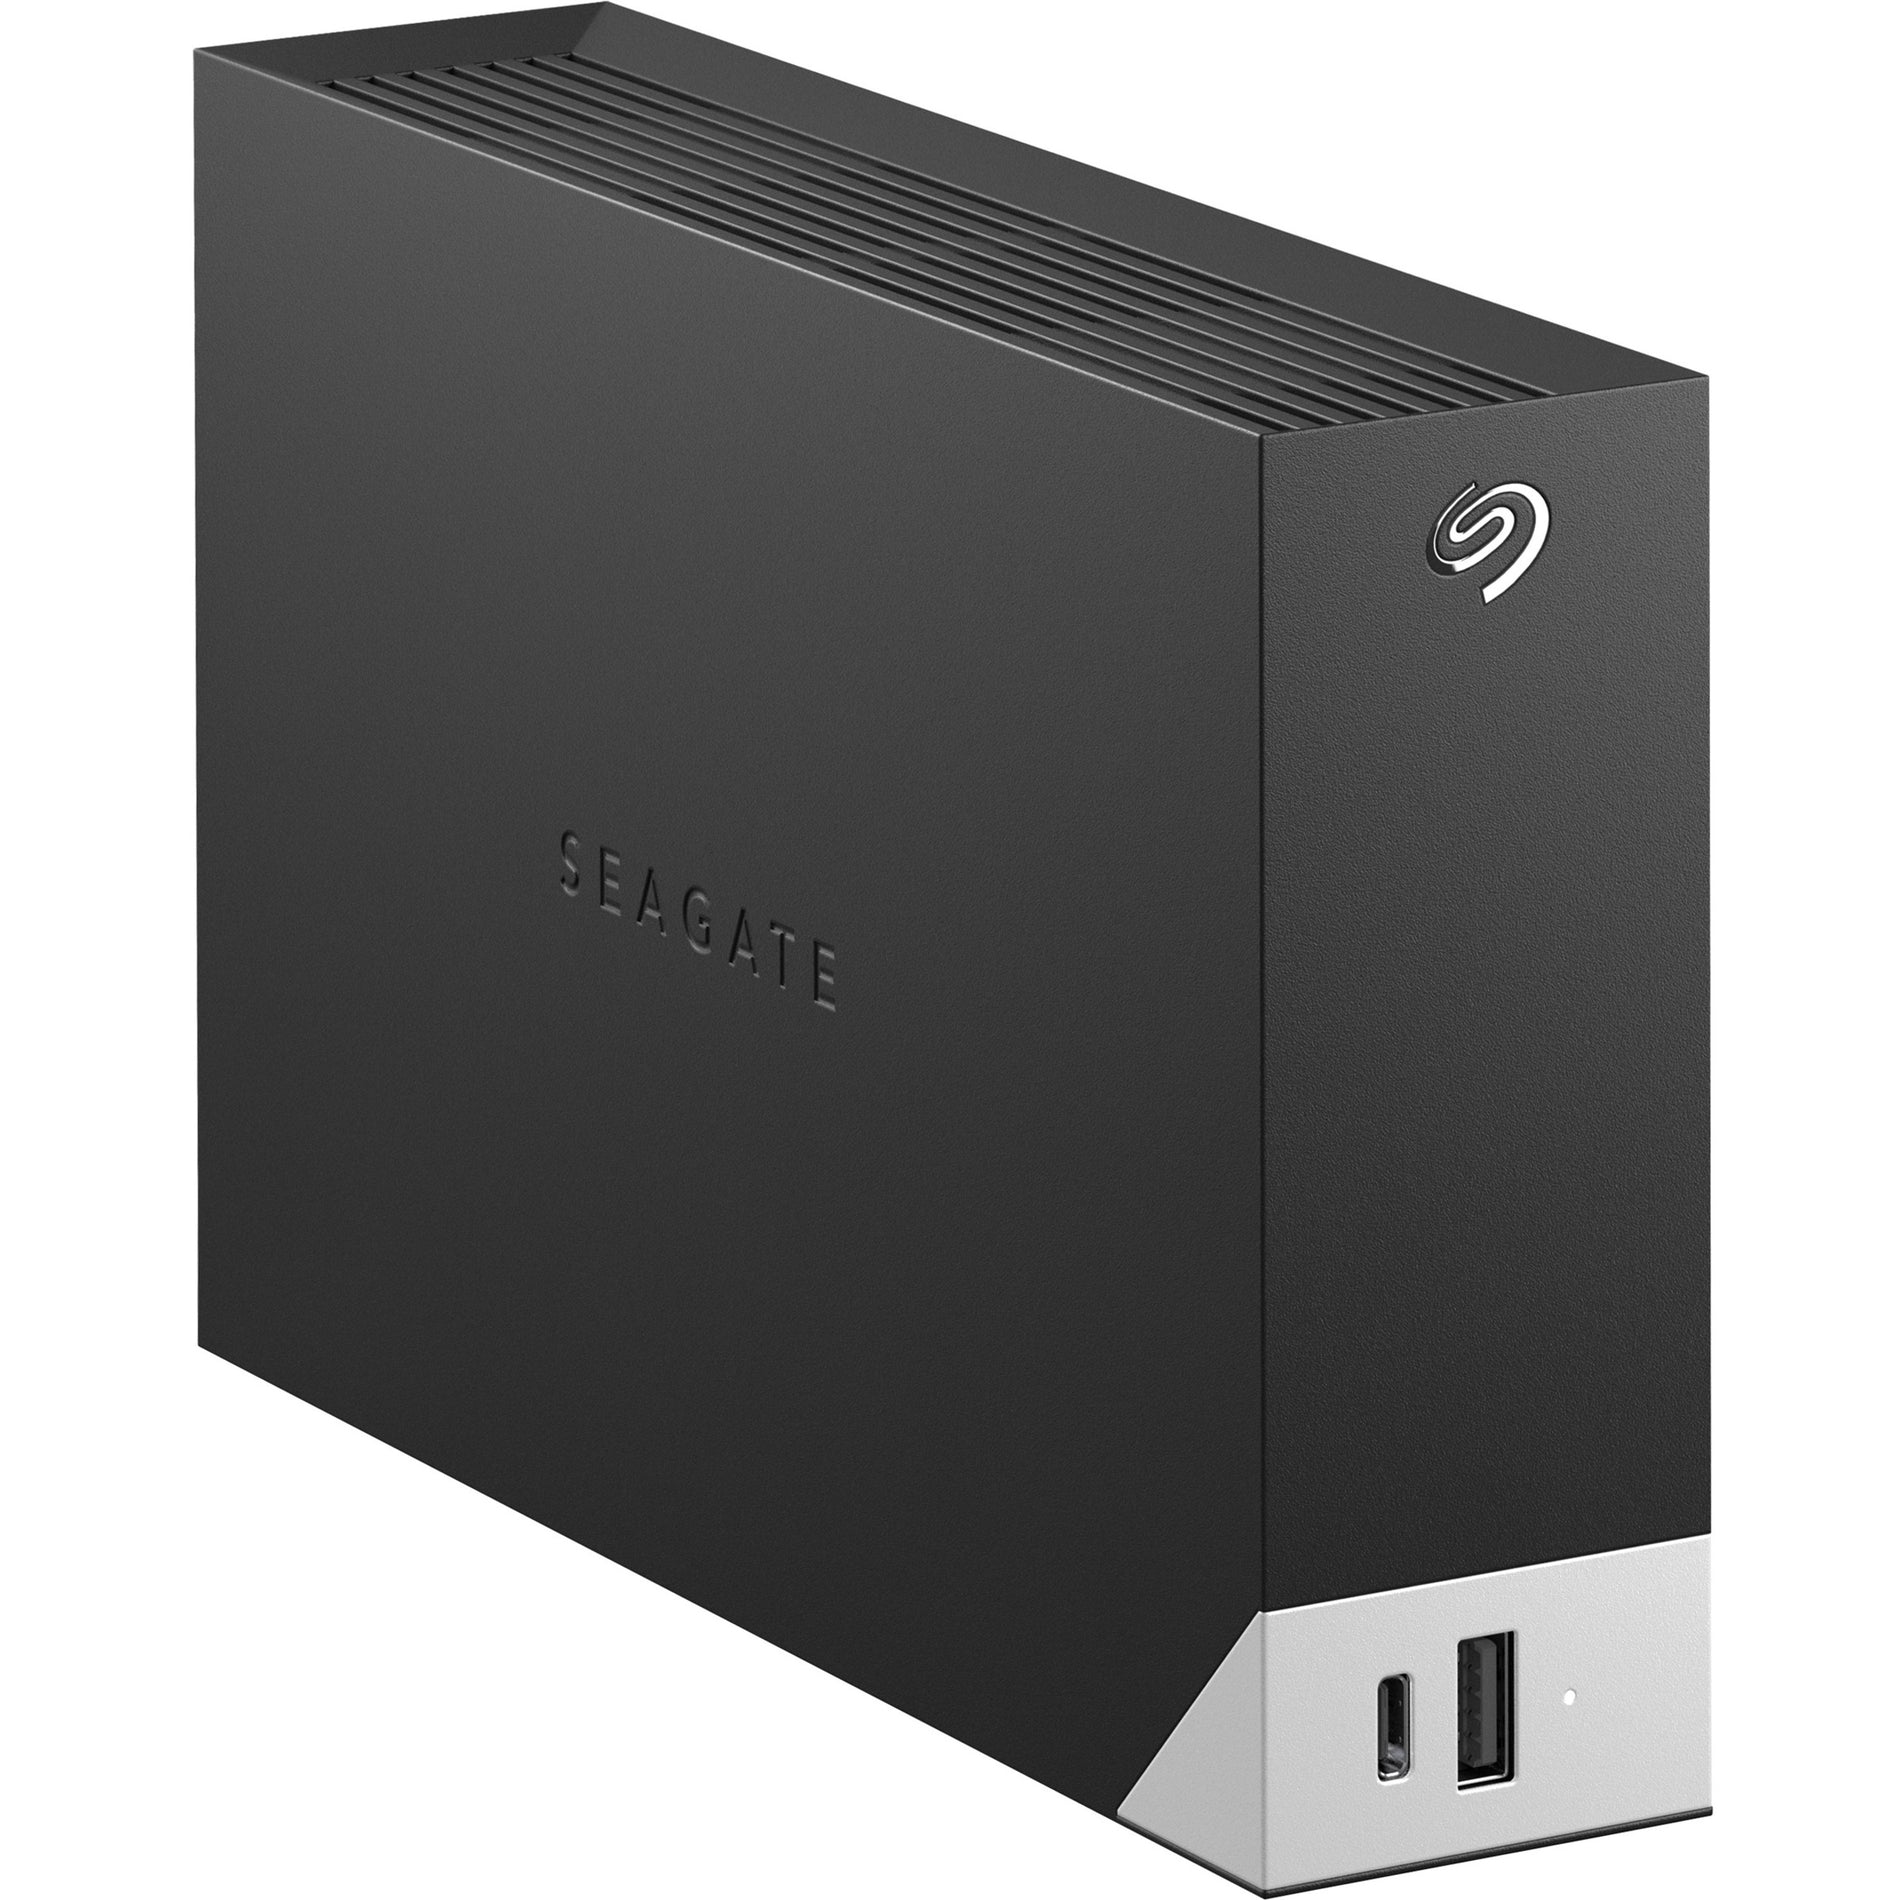 Seagate STLC14000400 One Touch Hard Drive, 14TB, USB 3.0, External, Black